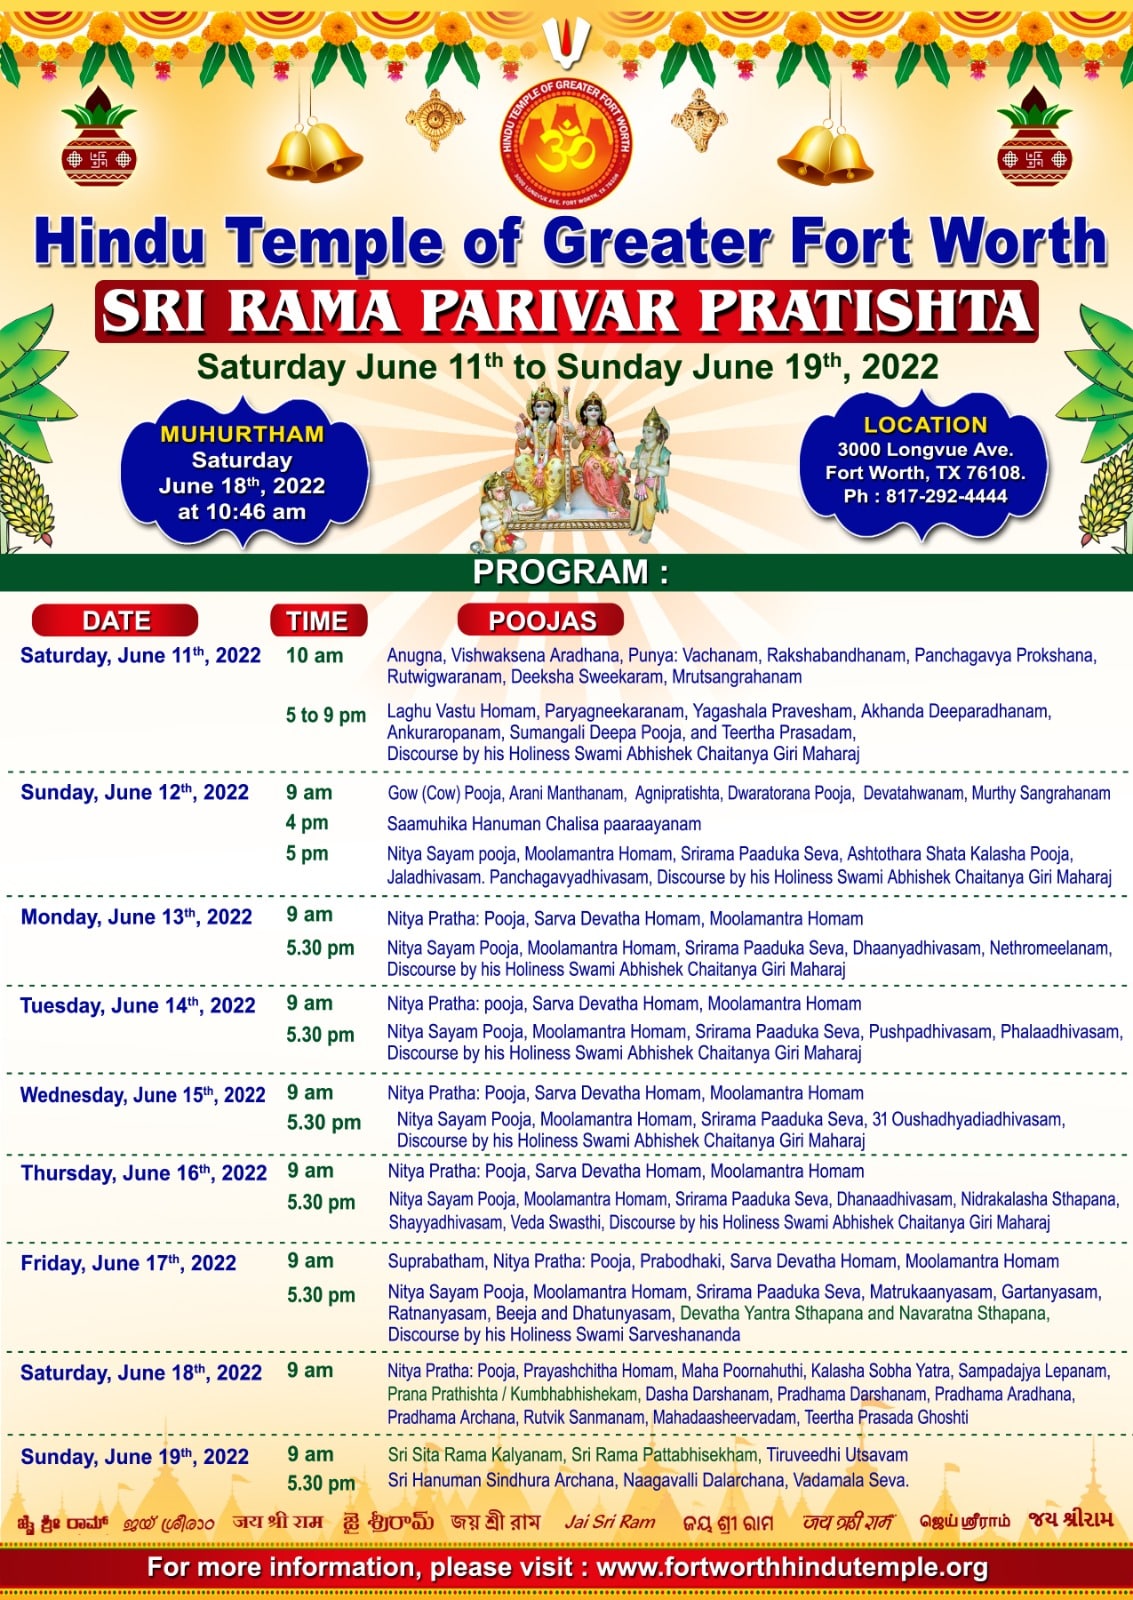 Sri Rama Parivar Pratishta schedule